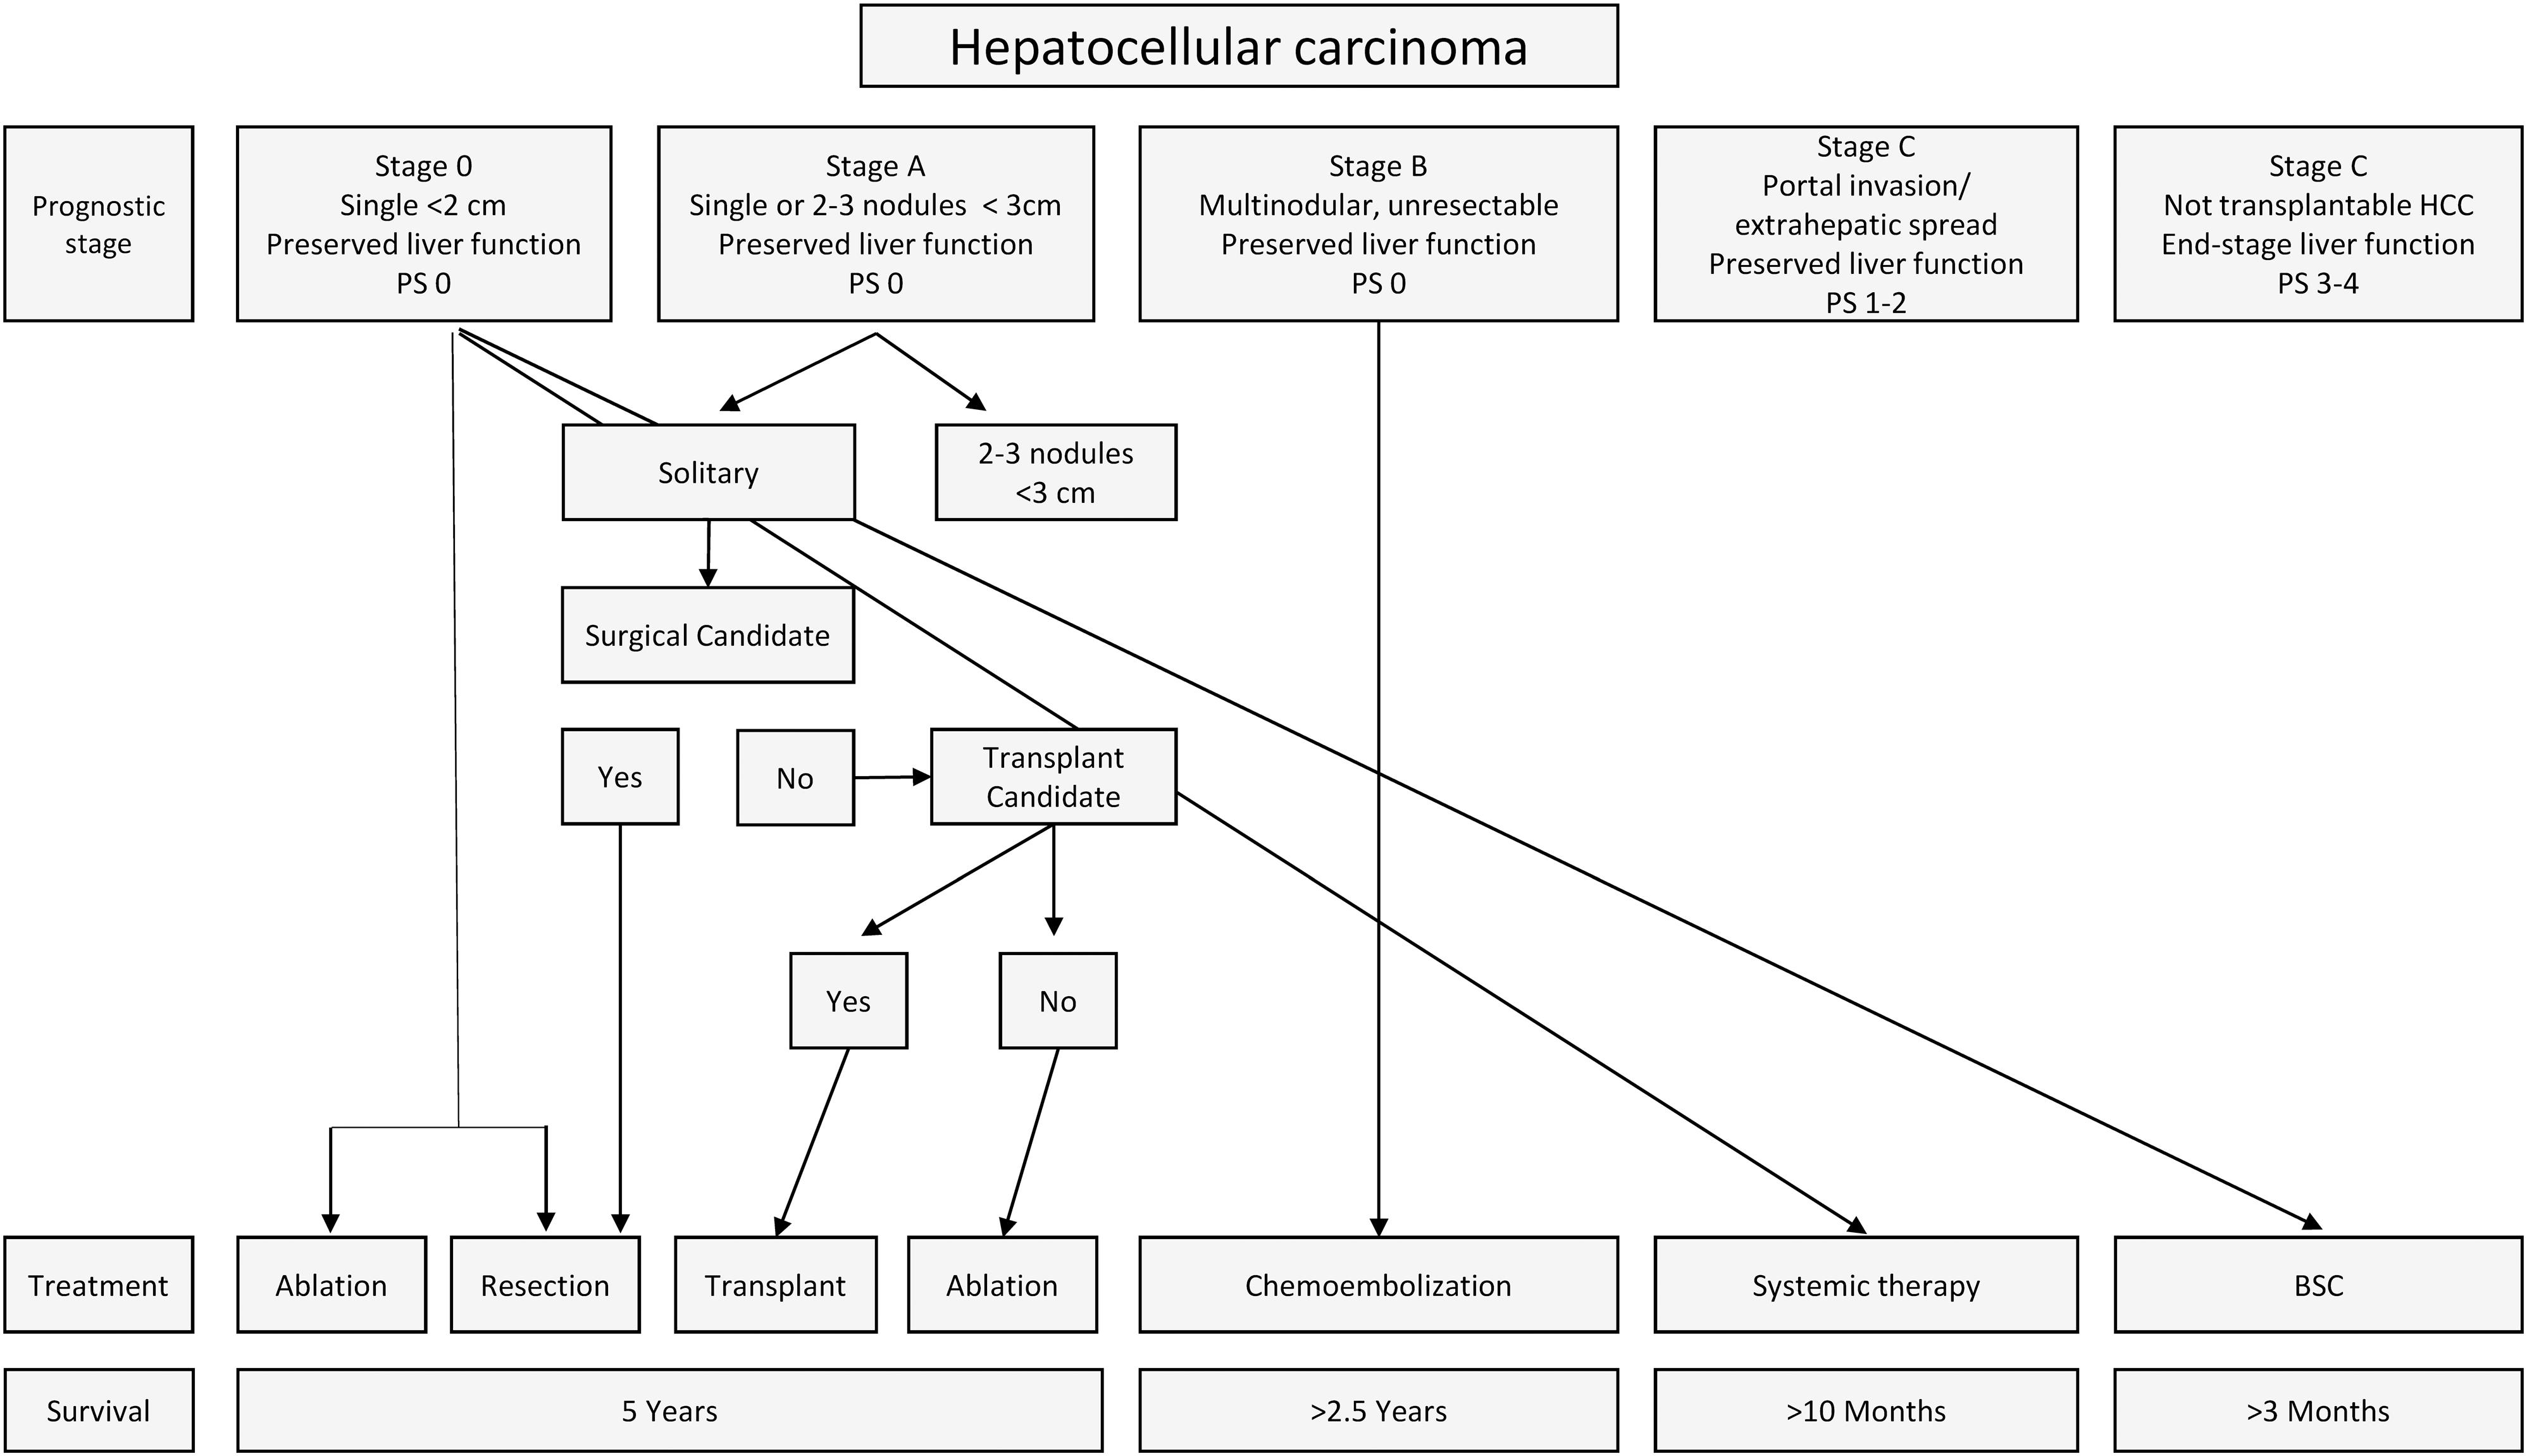 Hepatocellular carcinoma treatment in patients diagnosed with hepatocellular carcinoma.